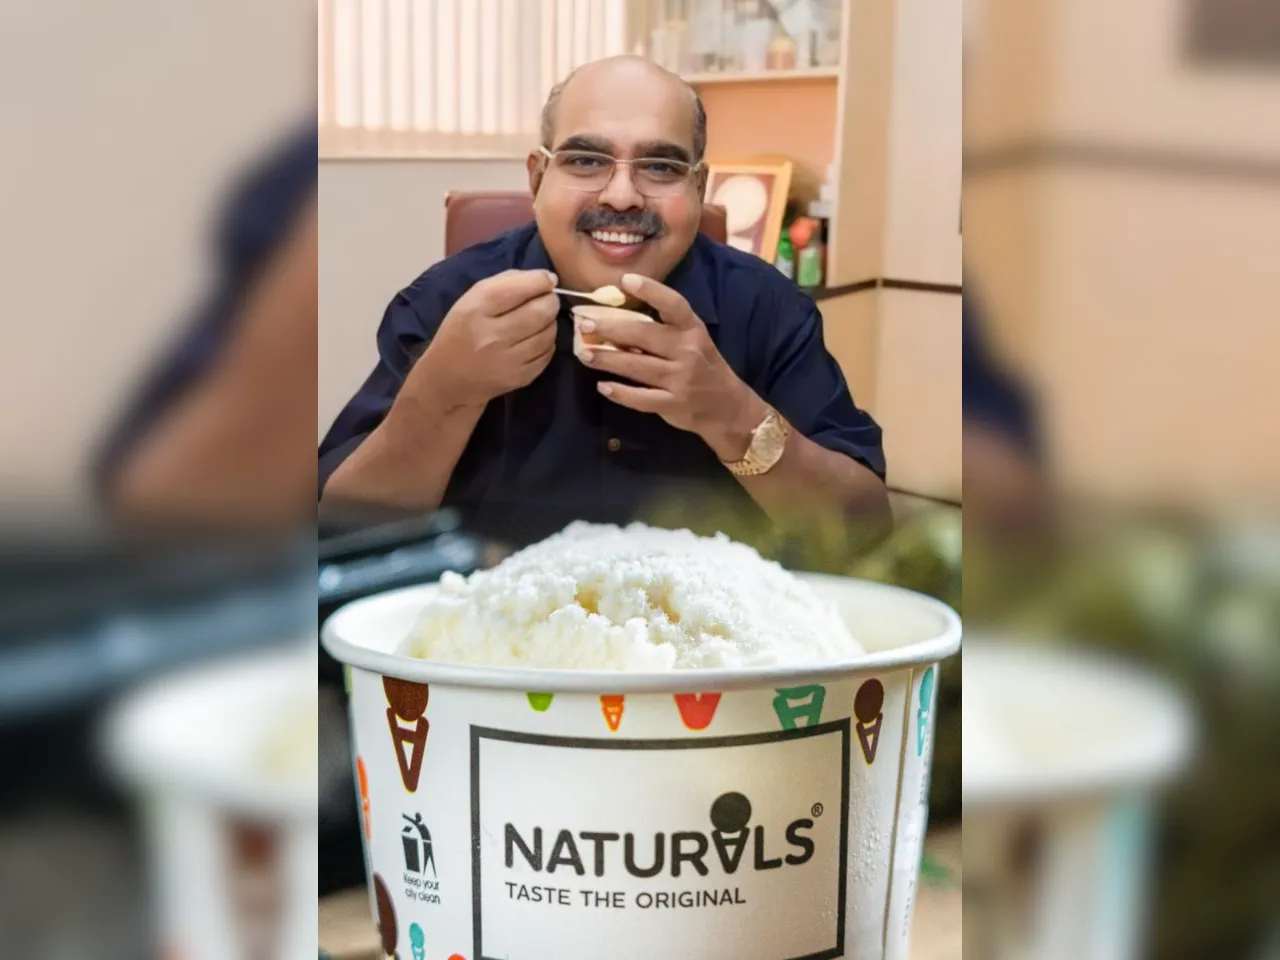 Raghunandan Kamath, who built the Rs 400 crore company Naturals Ice Cream, passes away at 75